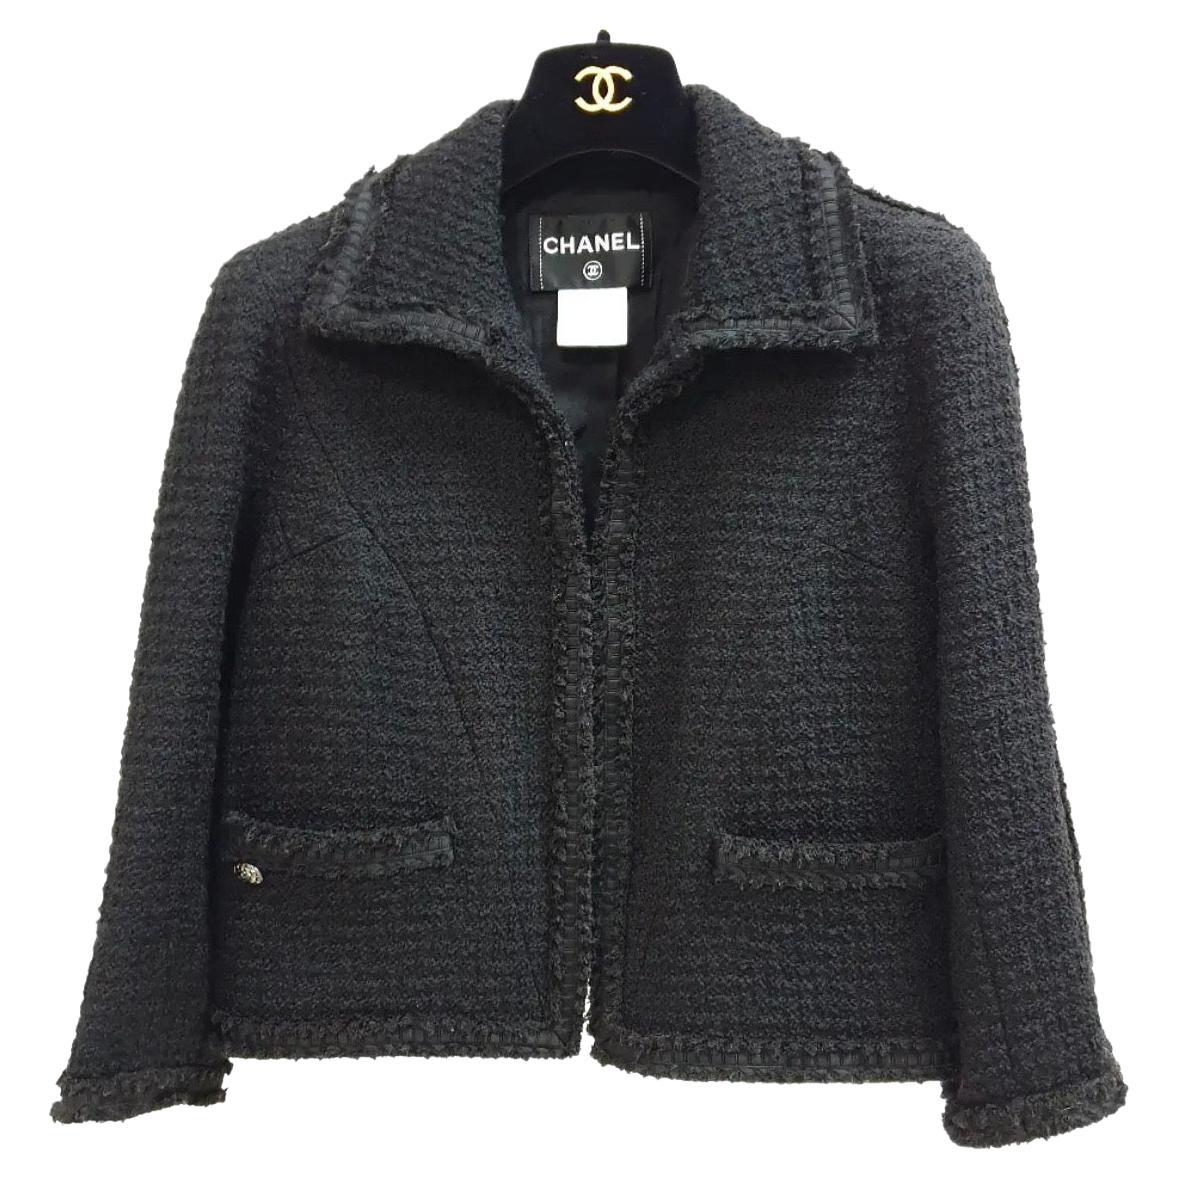 Chanel Black Tweed Cropped Blazer Jacket